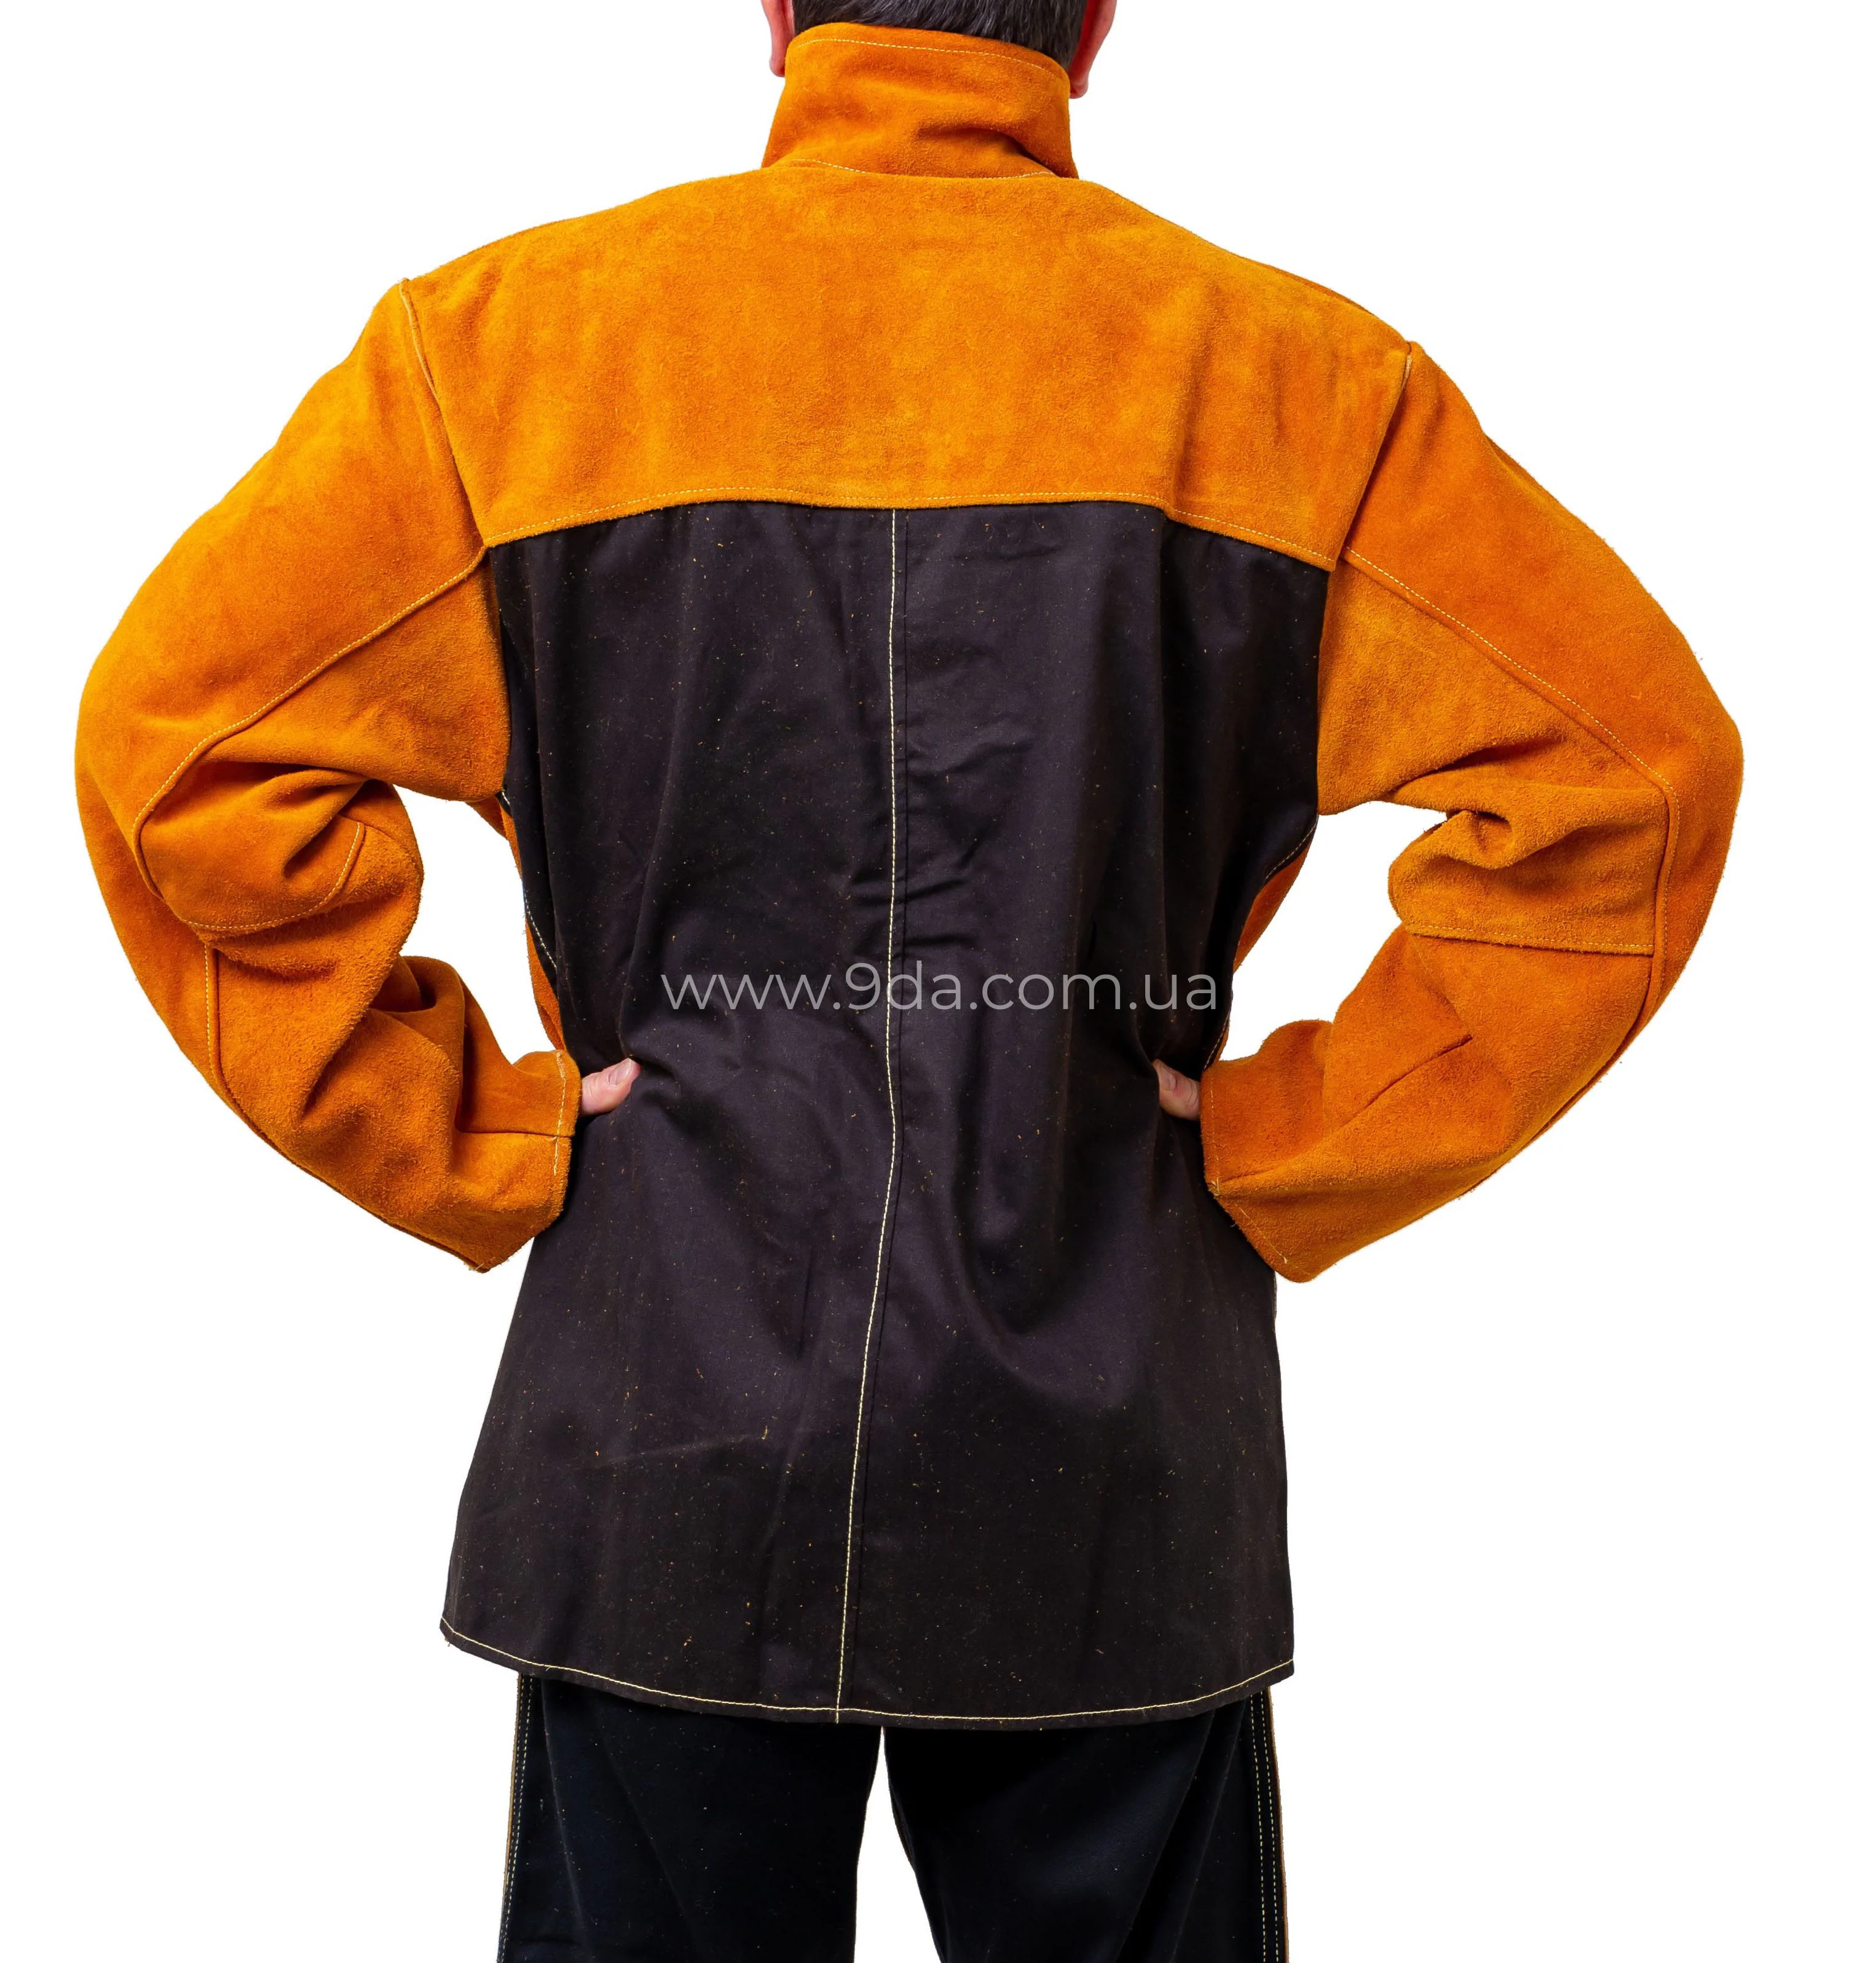 Куртка зварювальника, шкіряна, FR Front - Leather, Back Jacket Proban, size XXXL - 5